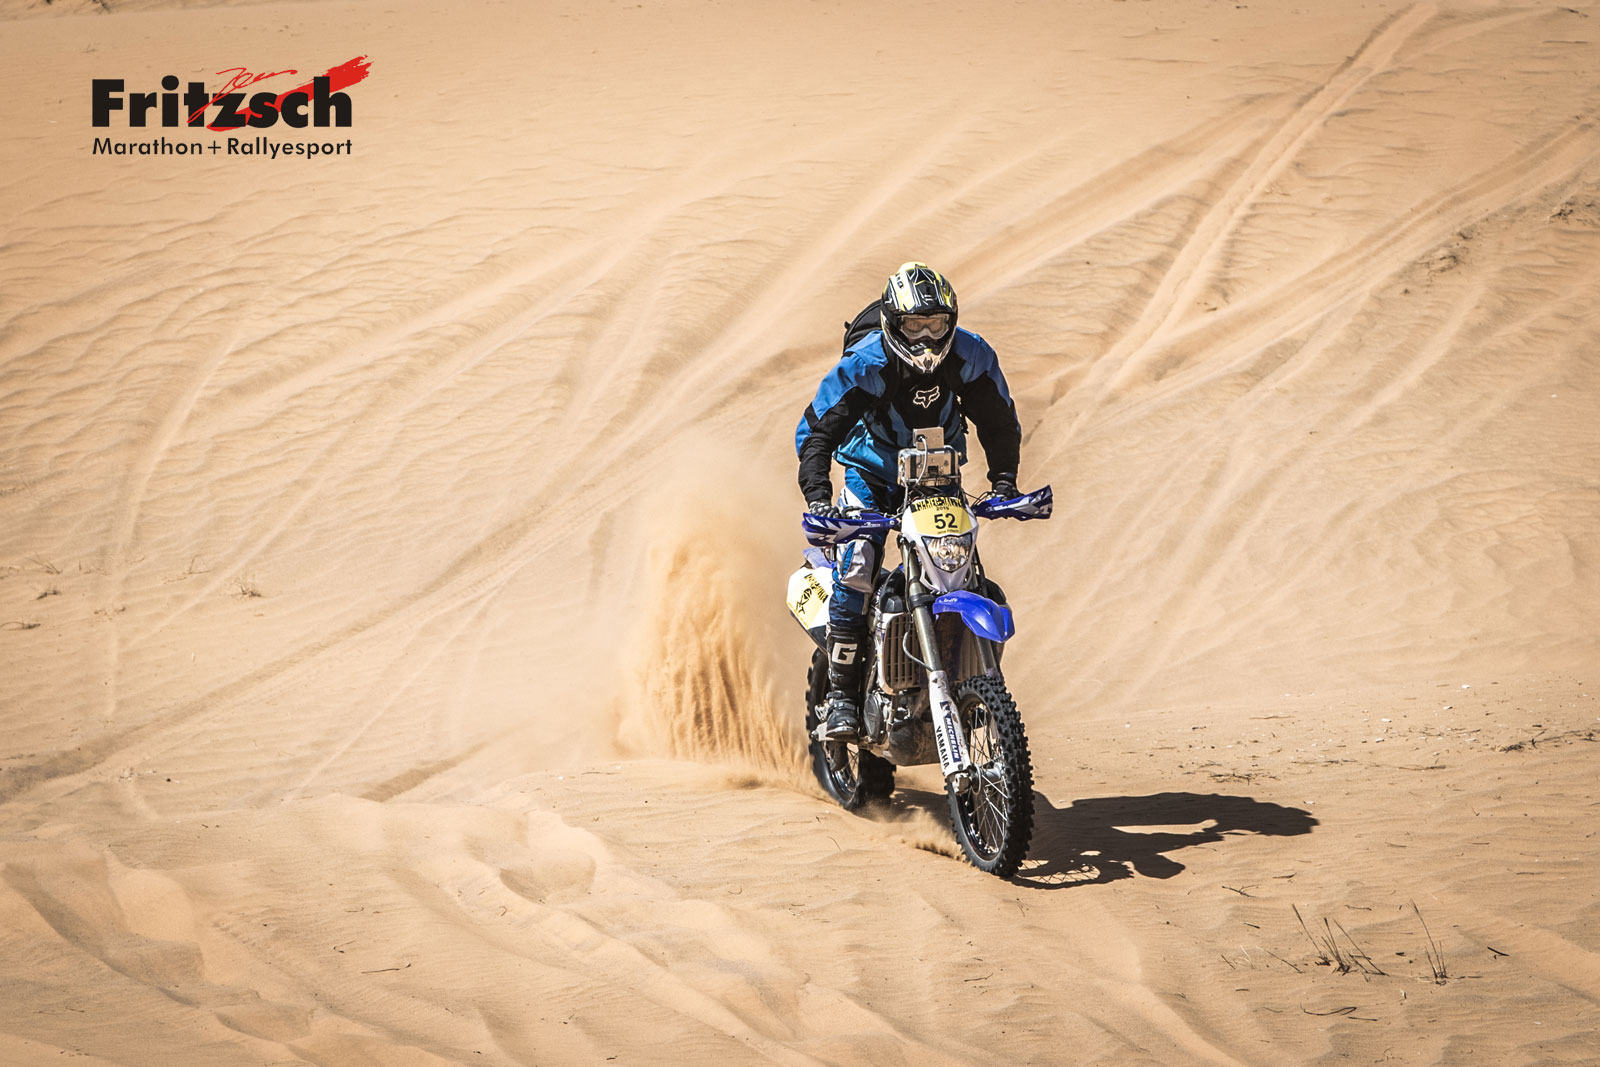 Tuareg Rallye 2019 in Algeria